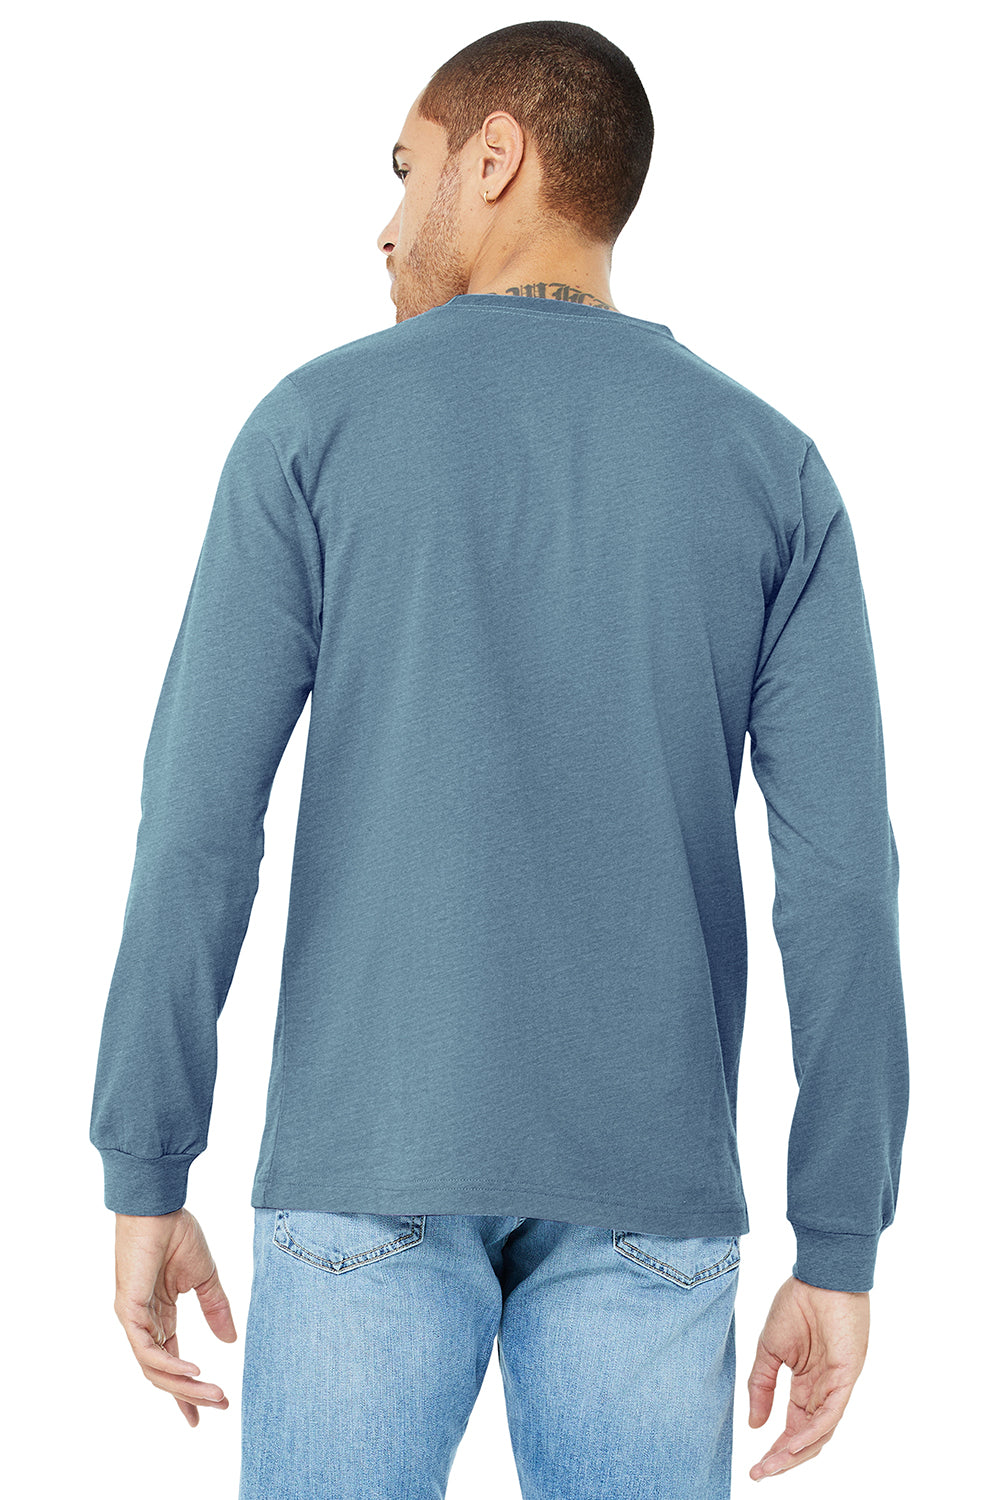 Bella + Canvas BC3501/3501 Mens Jersey Long Sleeve Crewneck T-Shirt Denim Blue Triblend Model Back